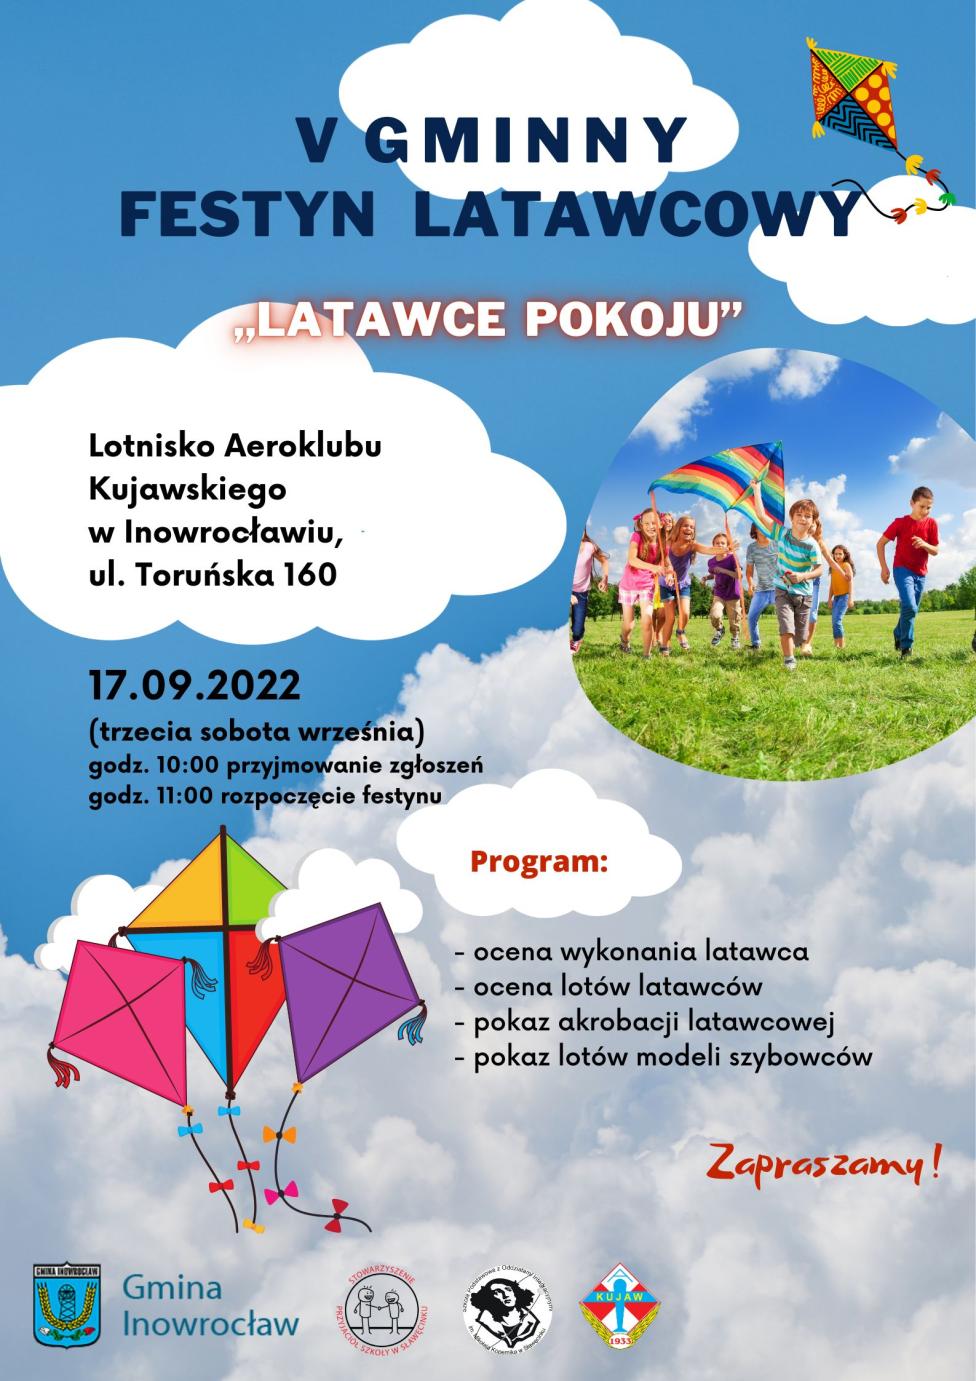 V Gminny Festyn Latawcowy w Inowrocławiu (fot. gminainowroclaw.eu )